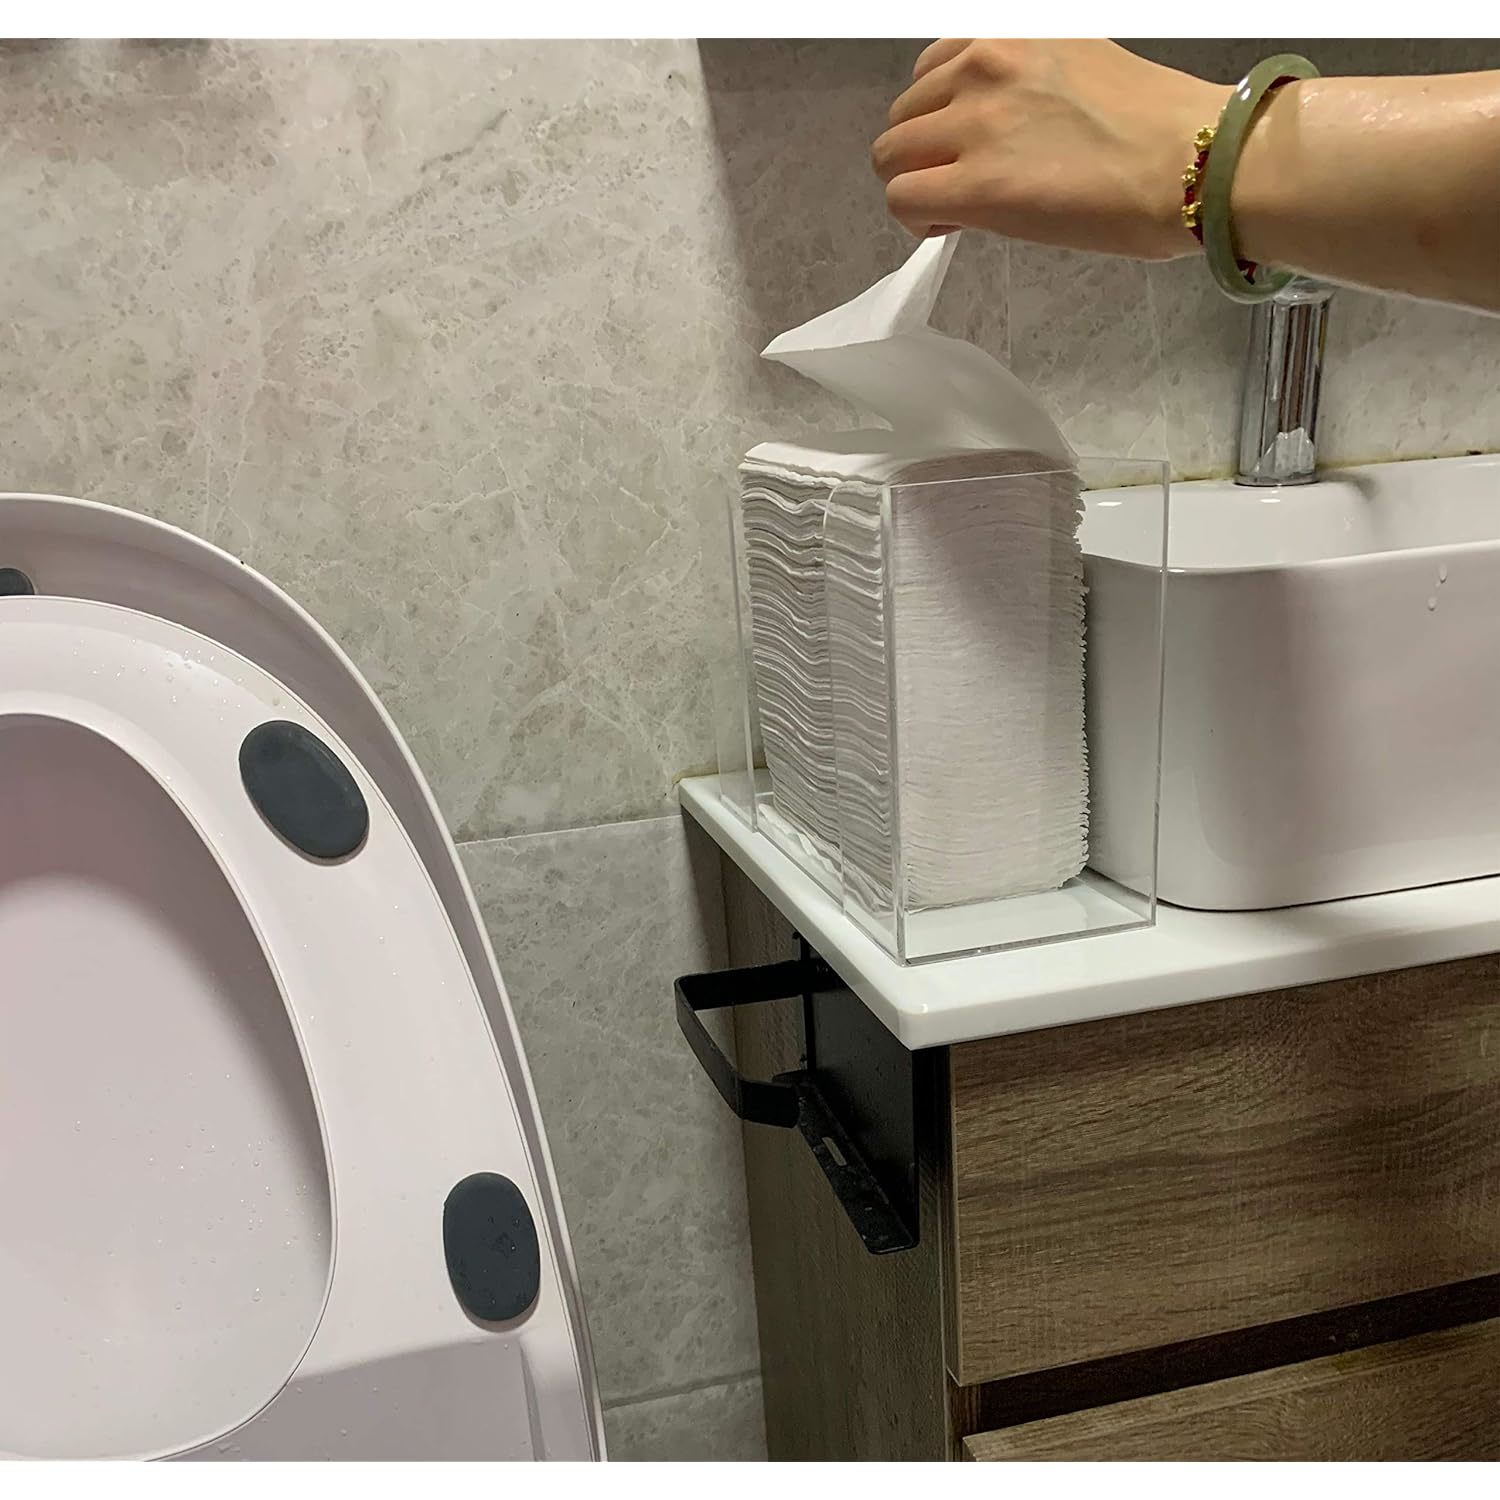 Innovia Touchless Paper Towel Dispenser - Countertop Models